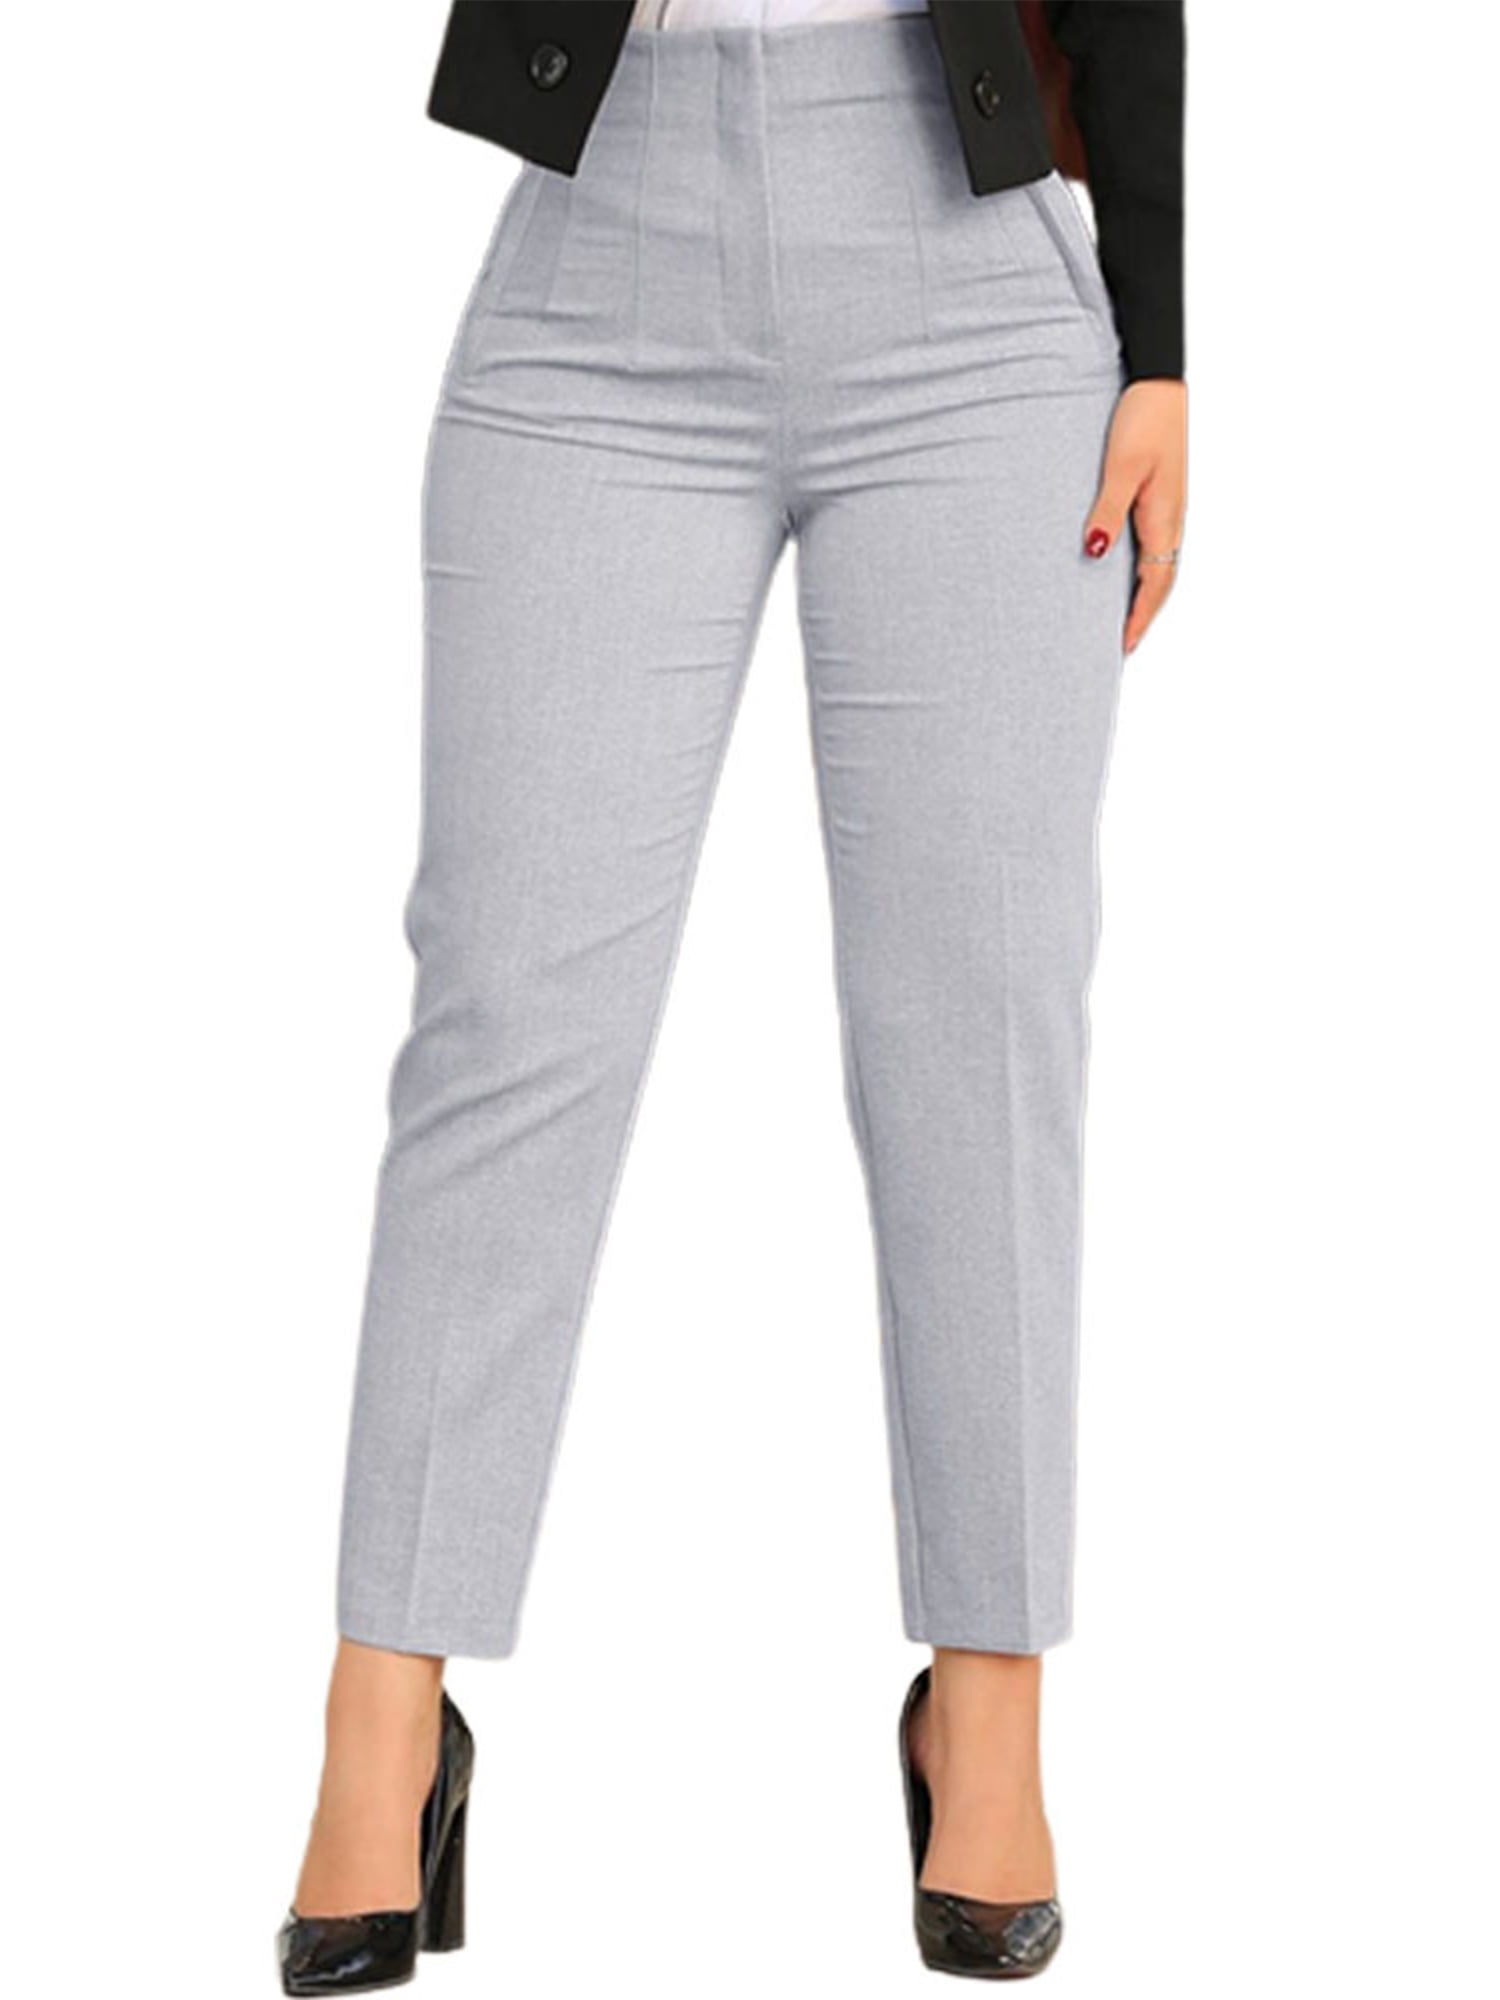 Frontwalk Womens Dress Pants Casual Office Work Slacks High Waist Business  Bottoms Trousers with Pocket Light Gray L